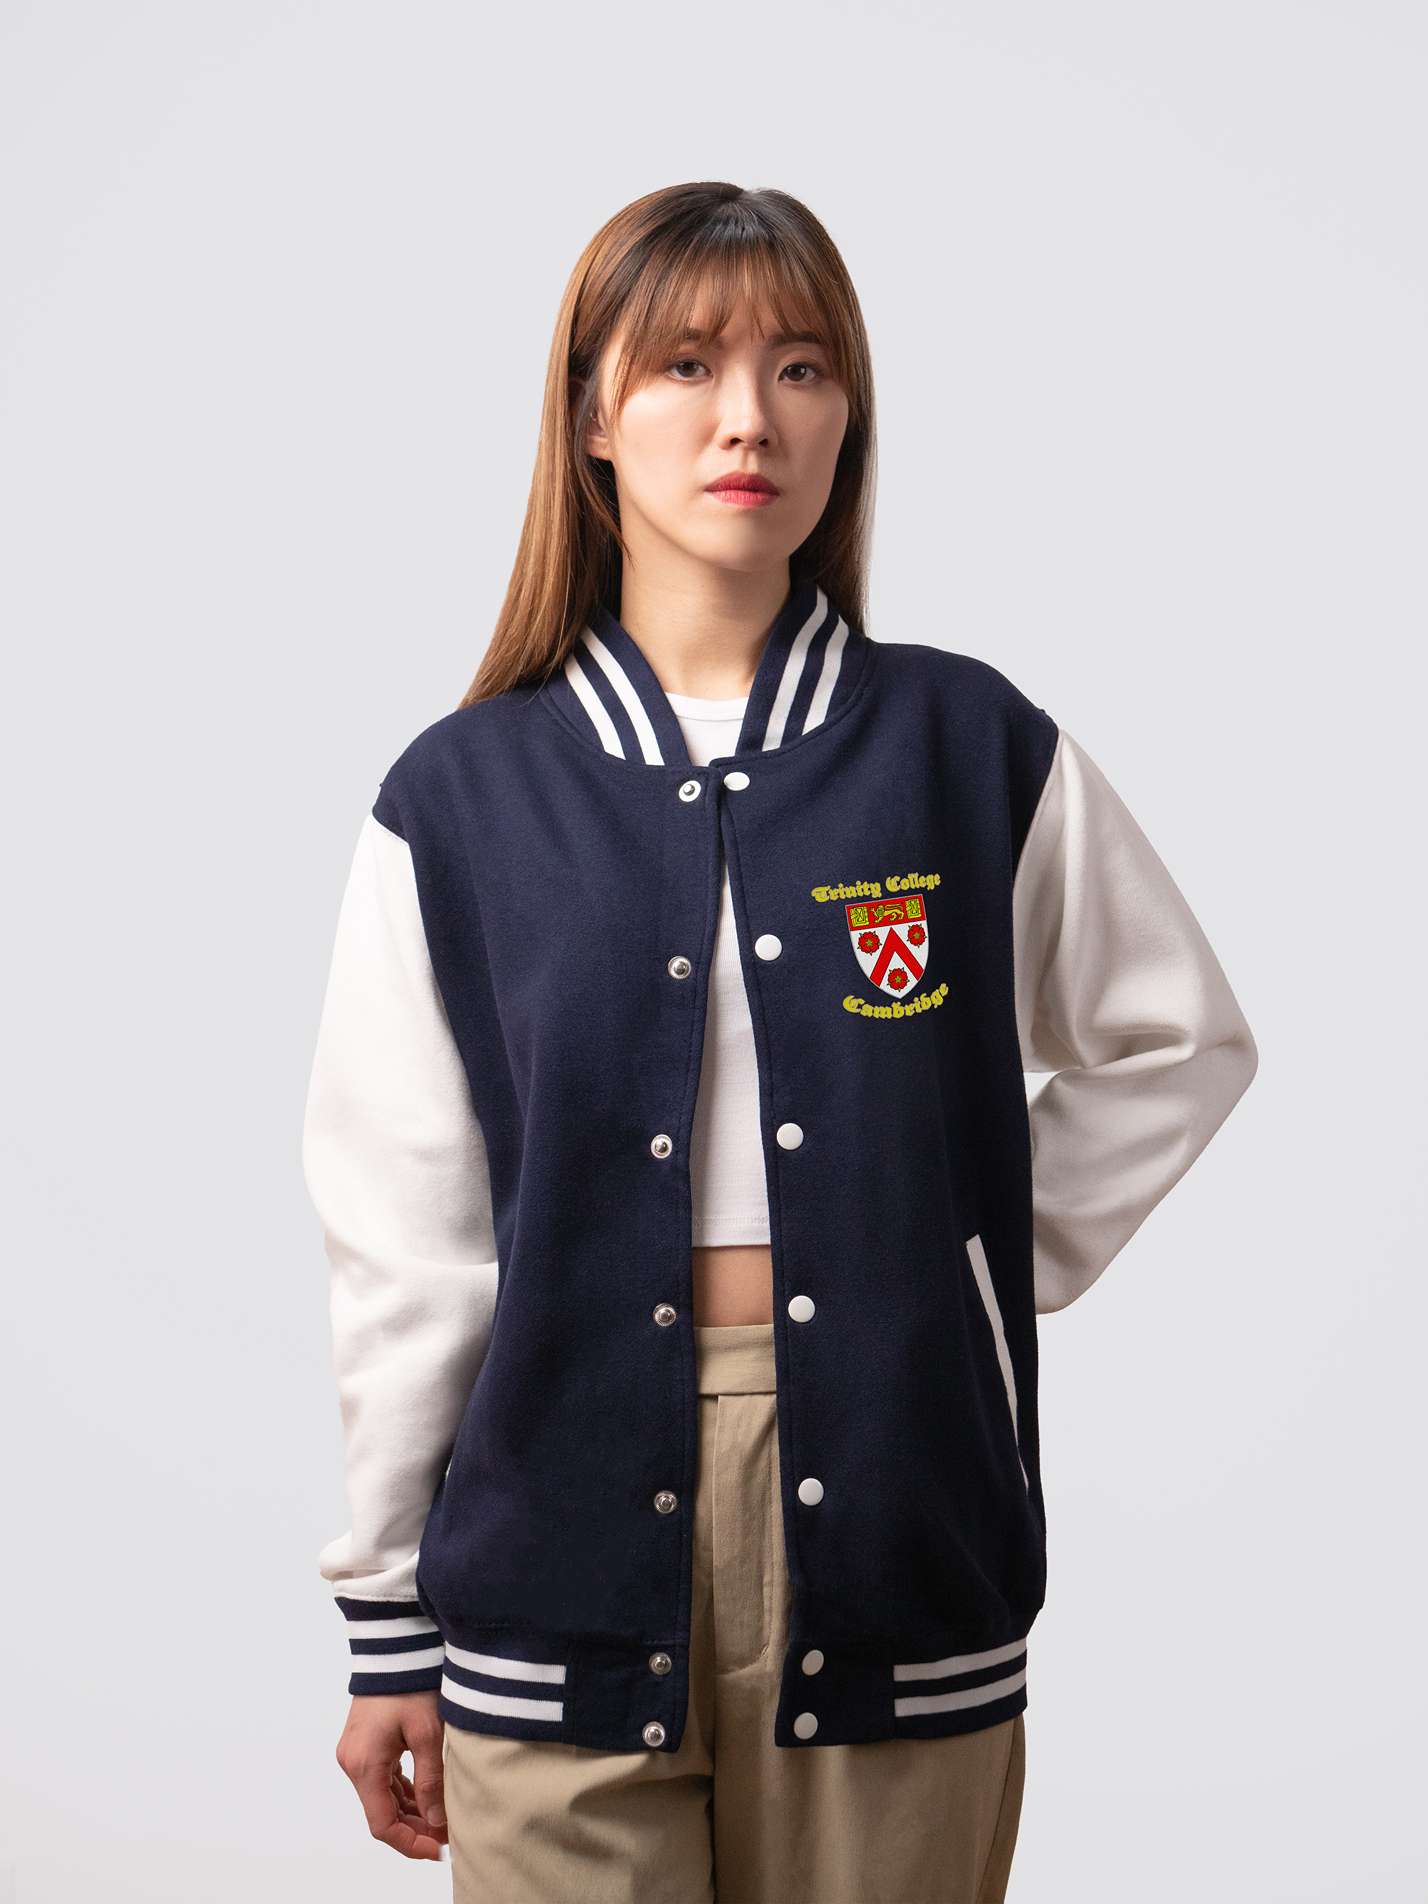 Retro style varsity jacket, with embroidered Trinity crest